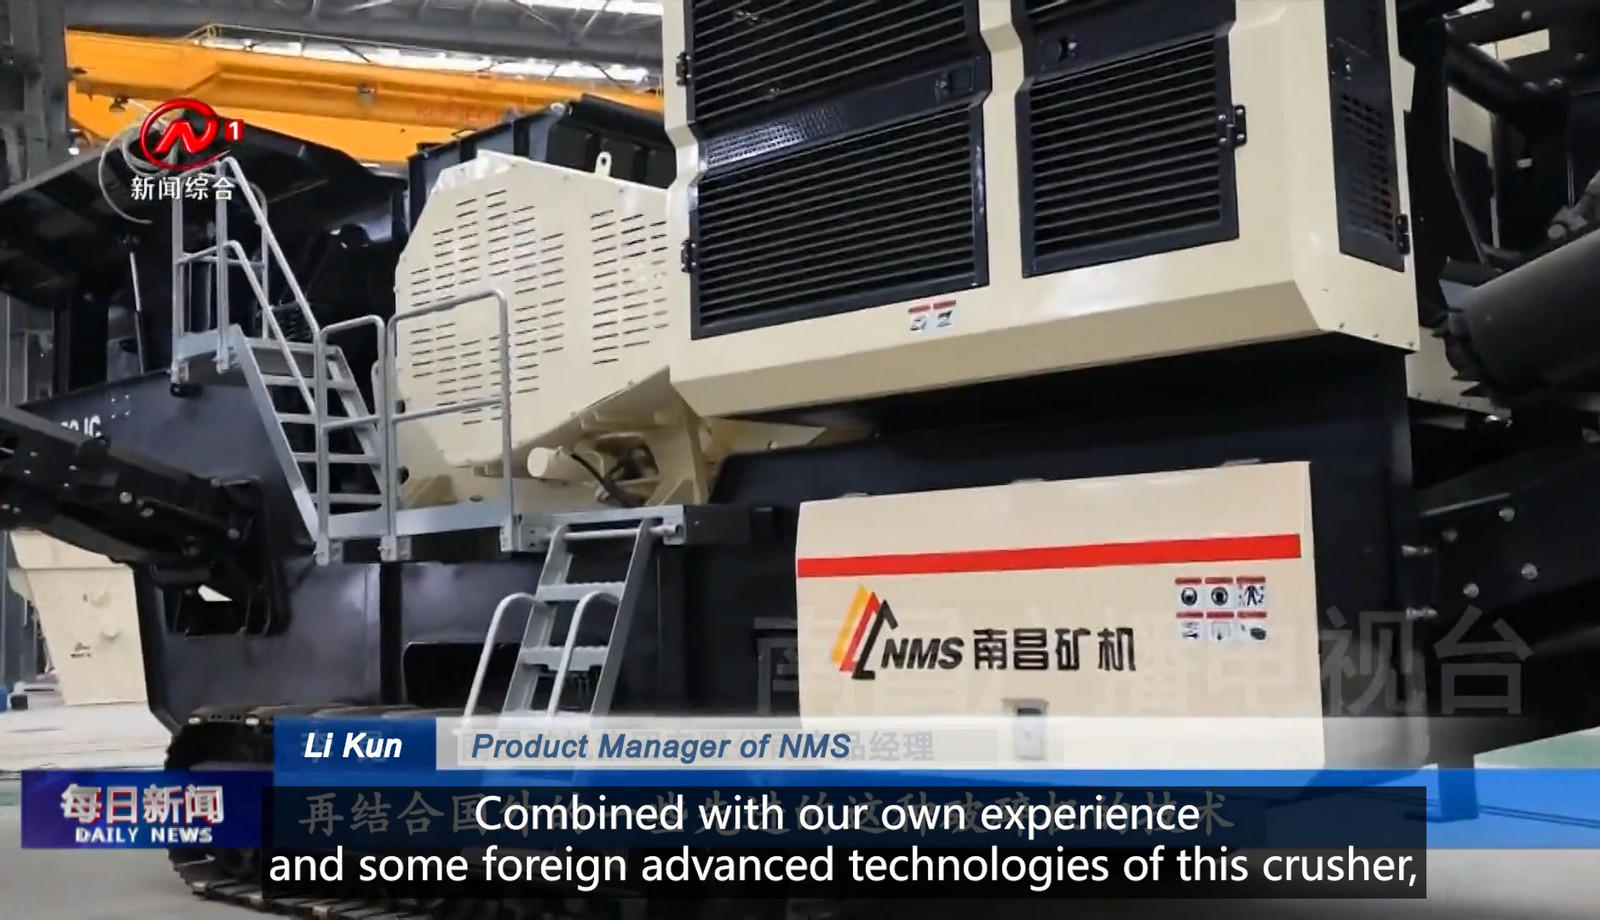 Nanchang TV station interviewed NMS